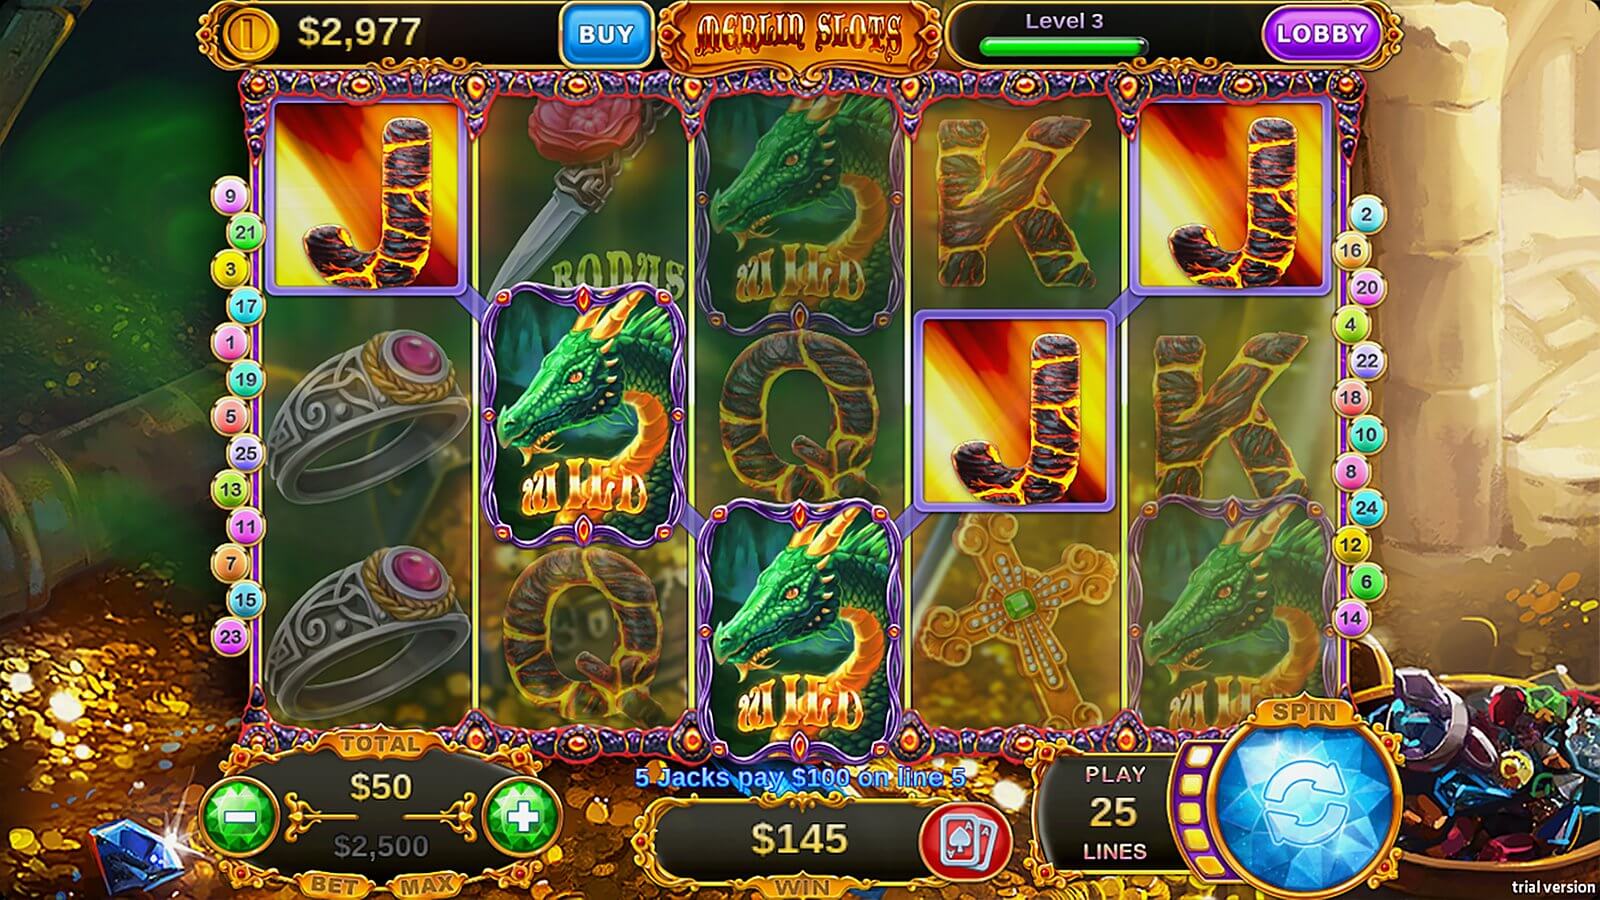 jackpot magic casino slots